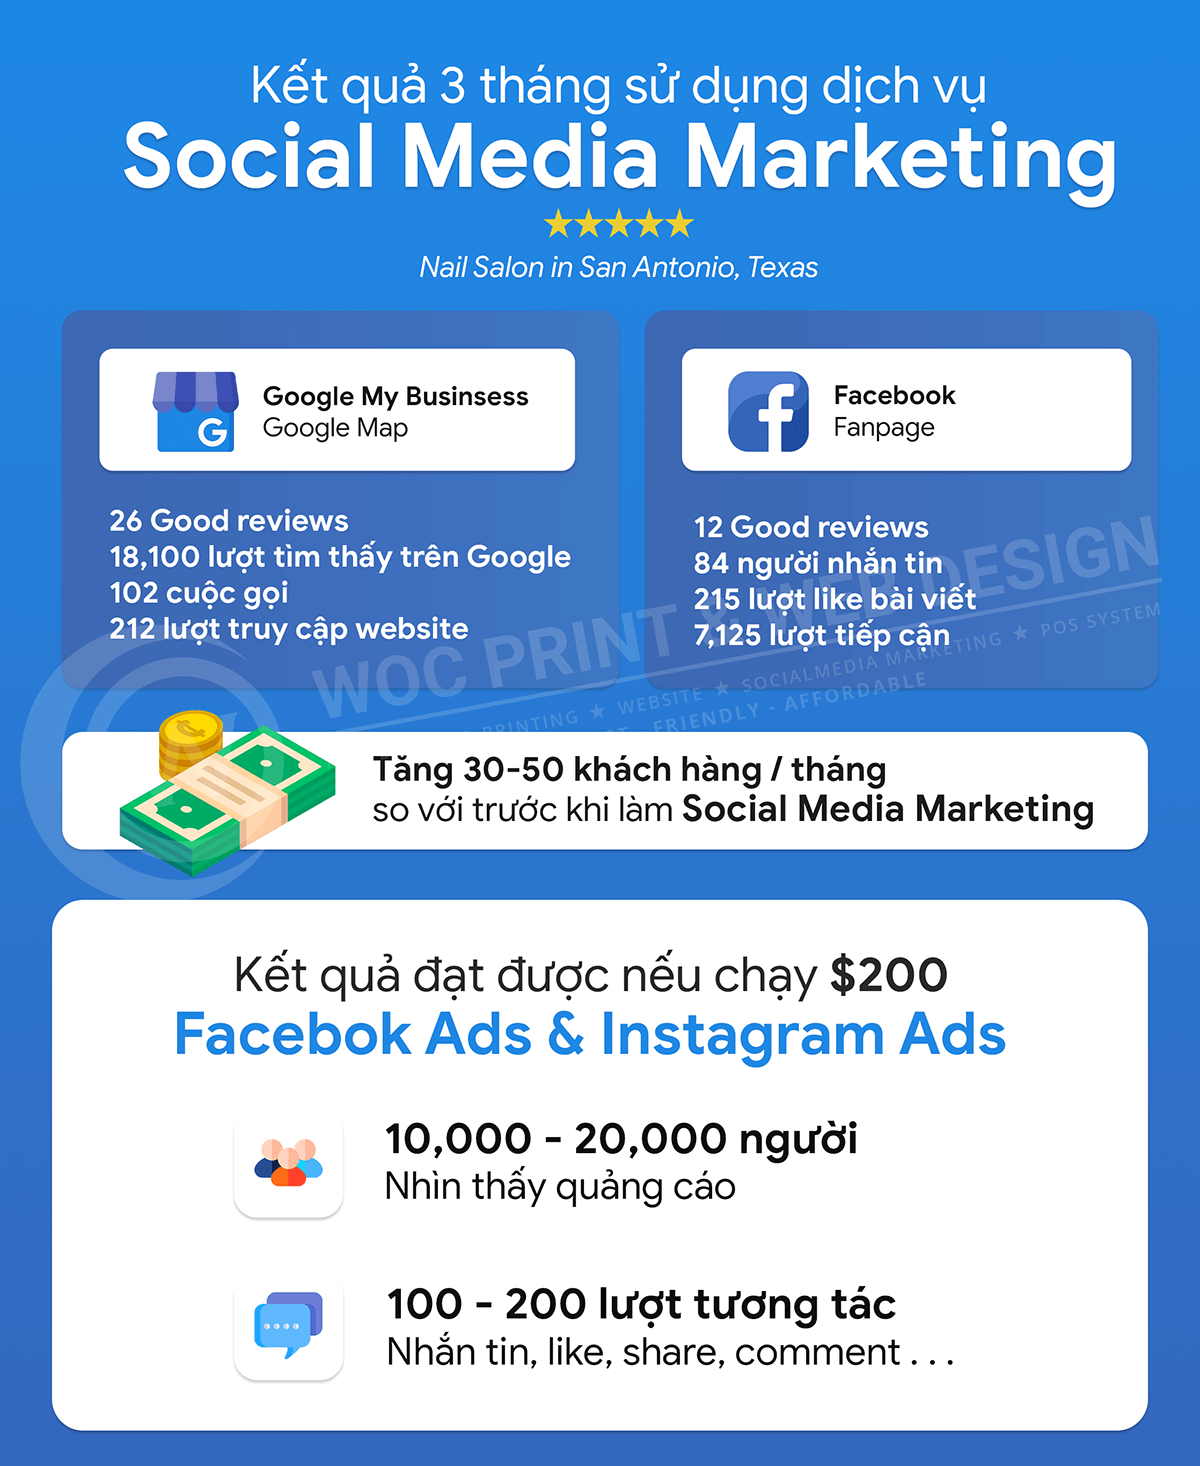 Kết quả Social Media Marketing tiệm Nail